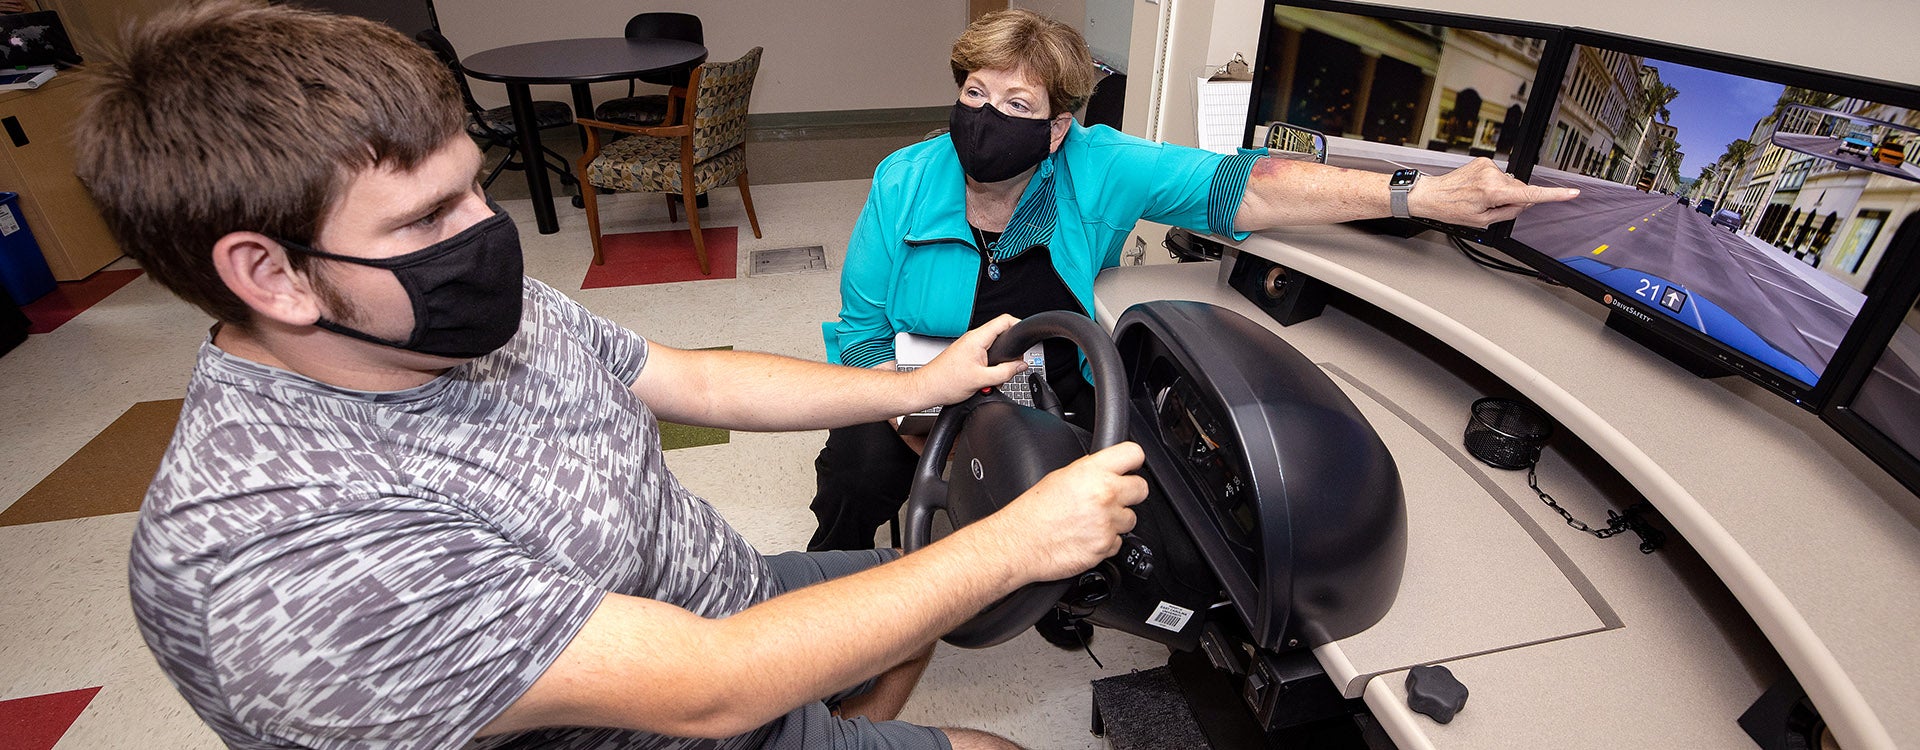 Dr. Anne Dickerson instructs Timmy Peaden in ECU’s driving simulator. 
(Photos by Rhett Butler | Video by Rich Klindworth)